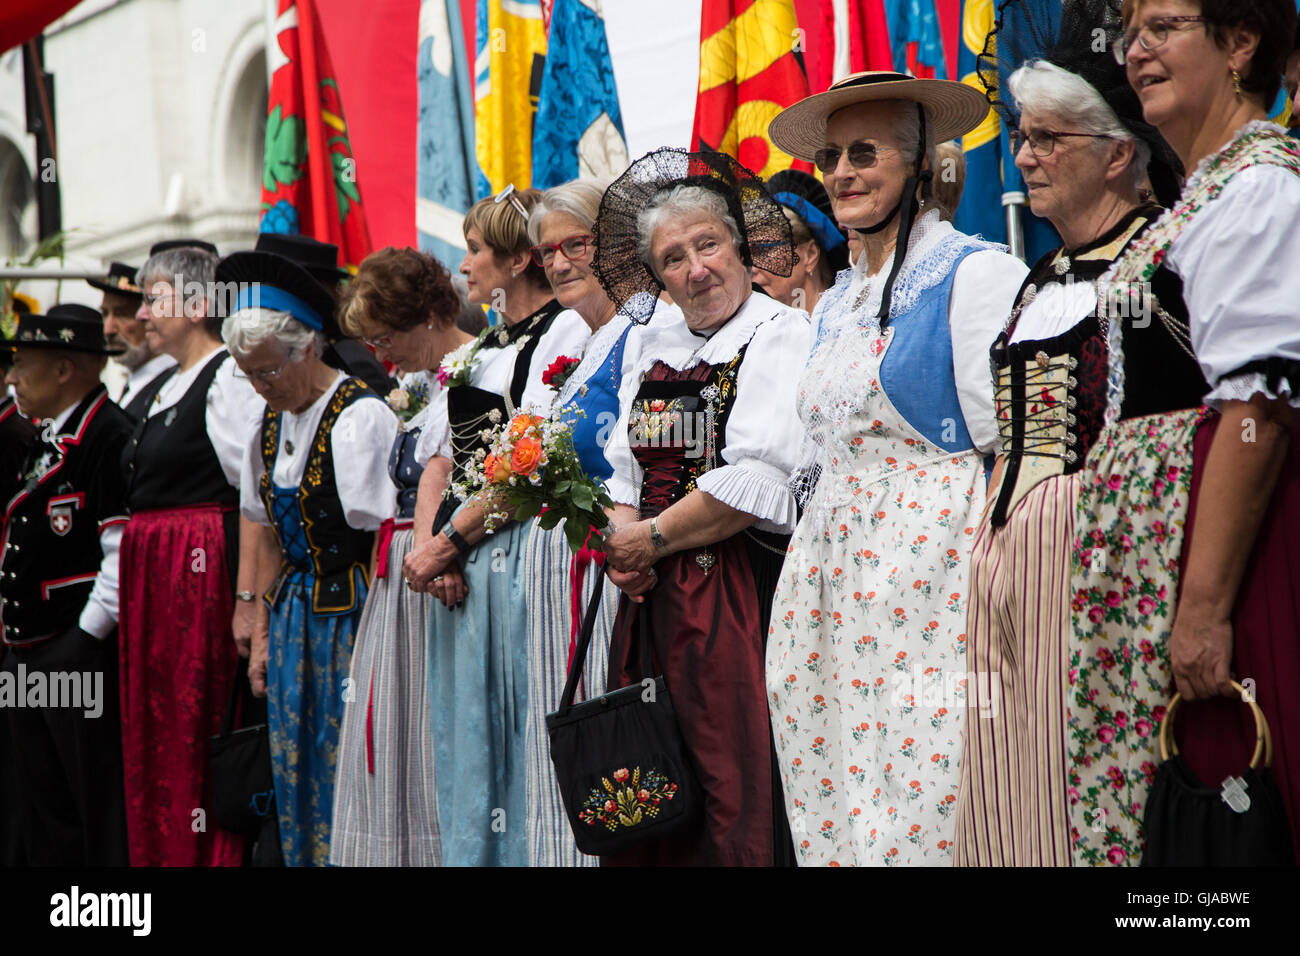 Swiss traditional dress -Fotos und -Bildmaterial in hoher Auflösung – Alamy